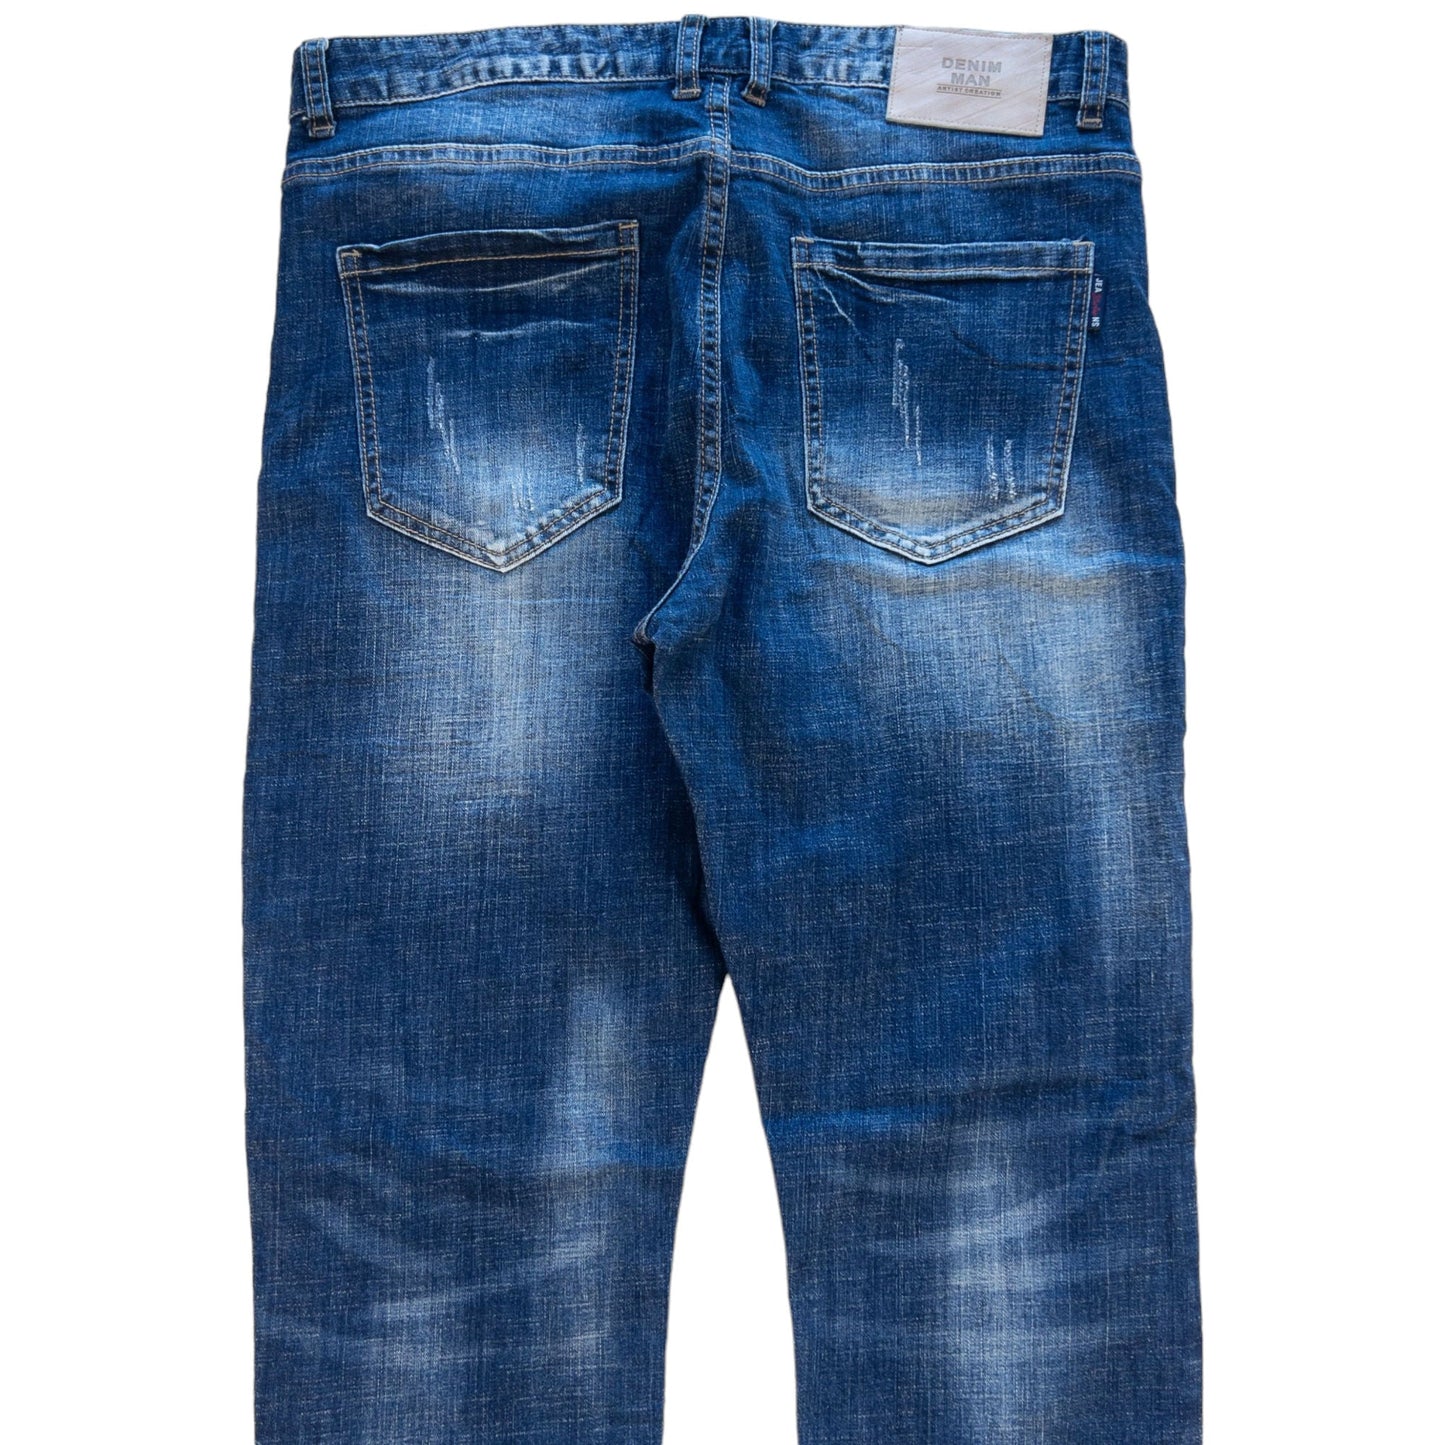 Vintage Japanese Denim Skinny Jeans Size W33